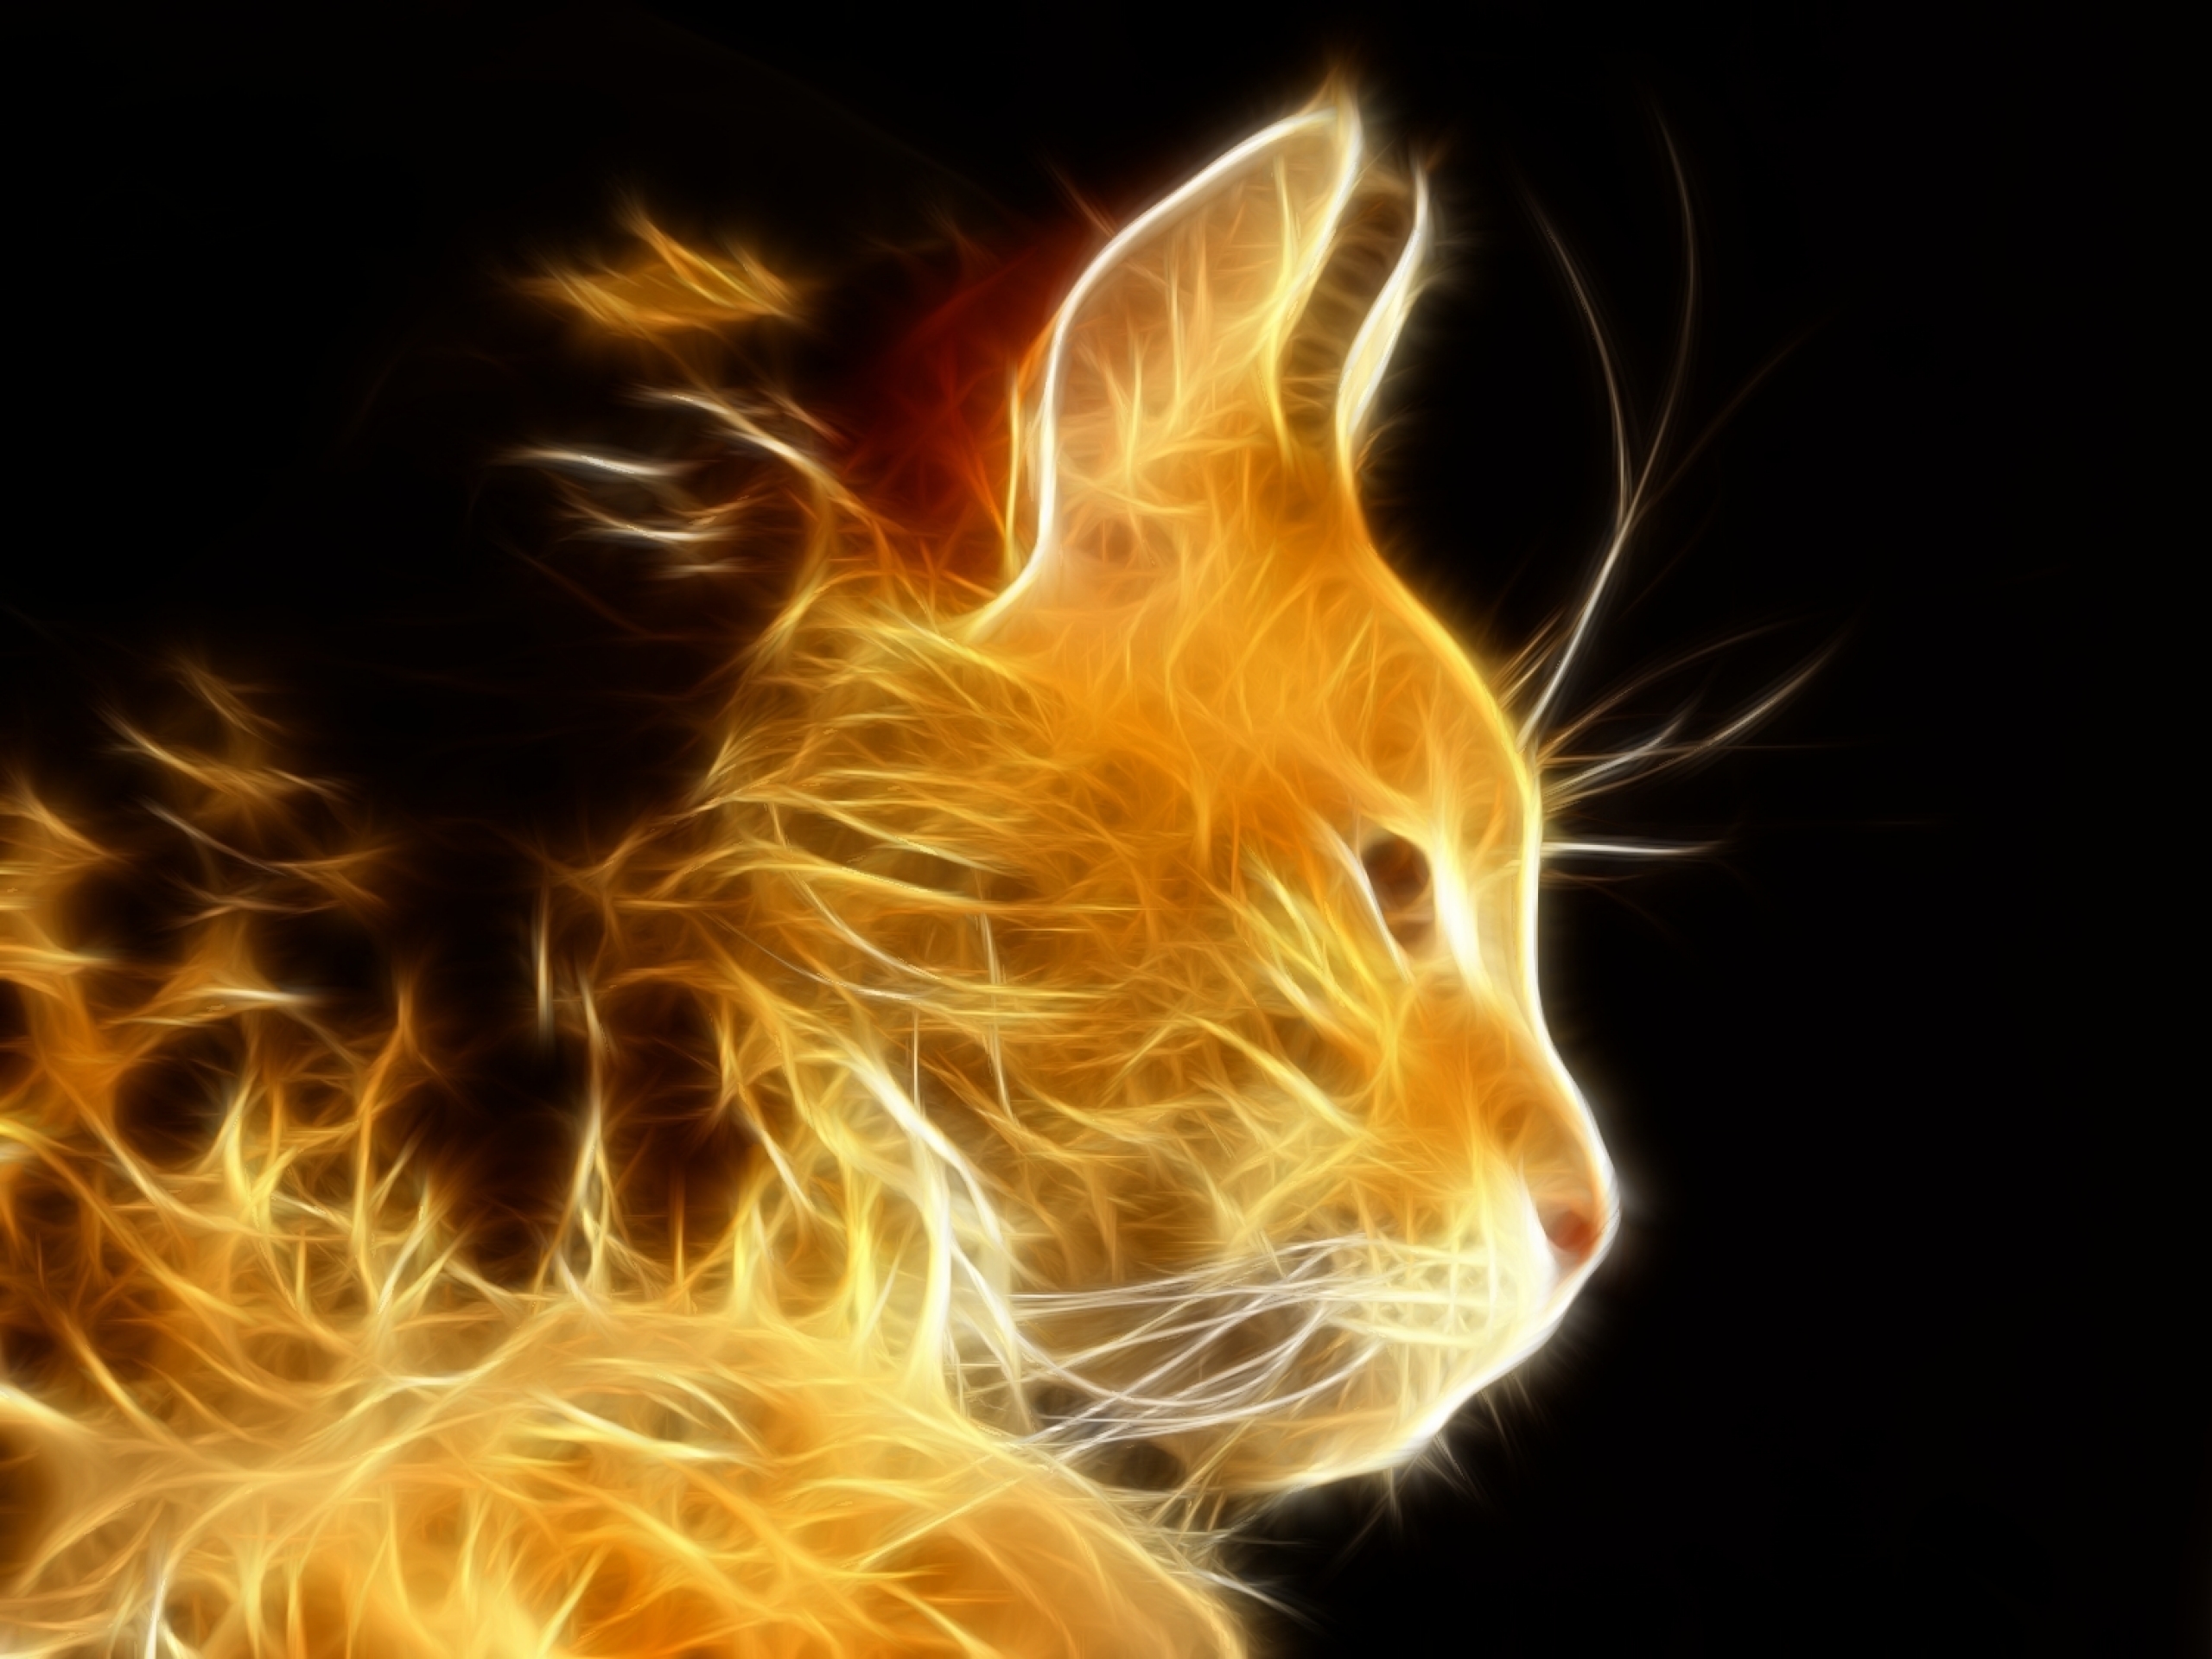 Cat HD Wallpaper | Background Image | 2560x1920 | ID ...